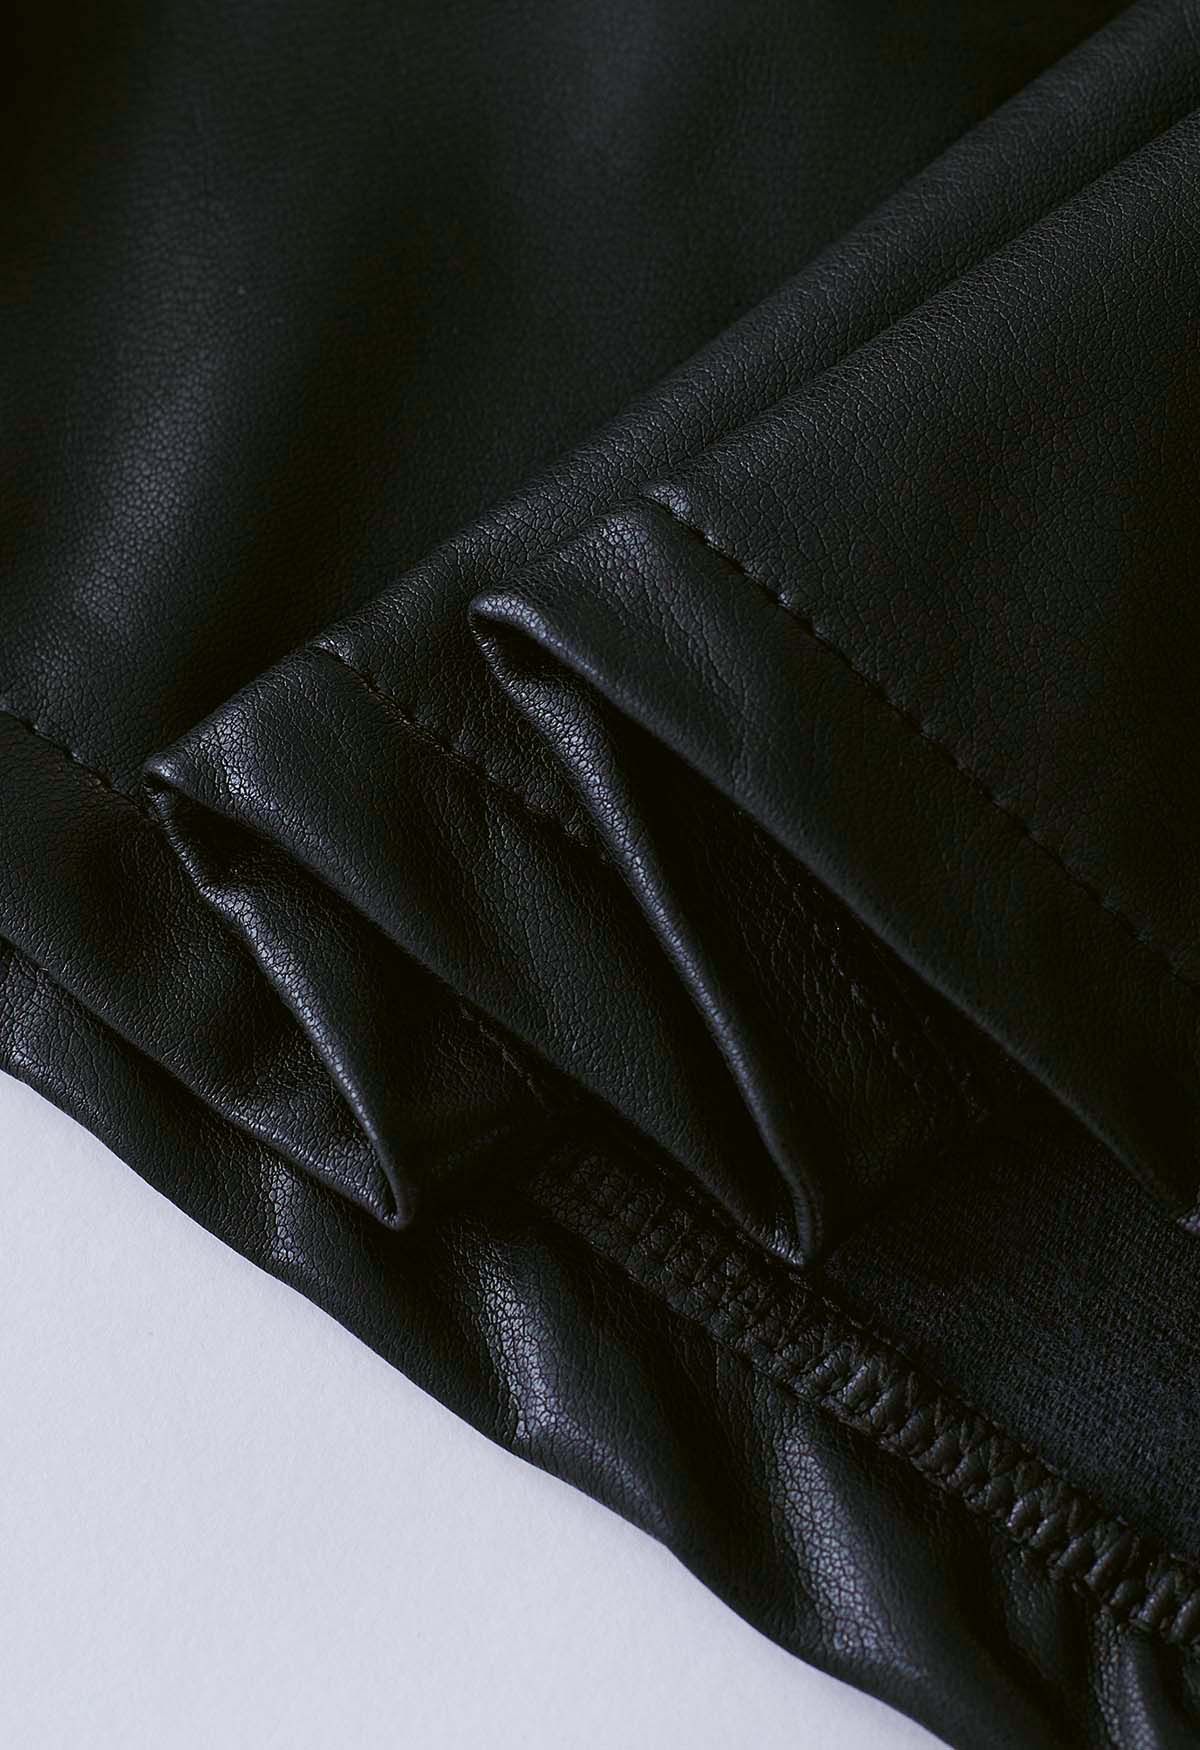 Elastic Waist Faux Leather Mini Skirt in Black